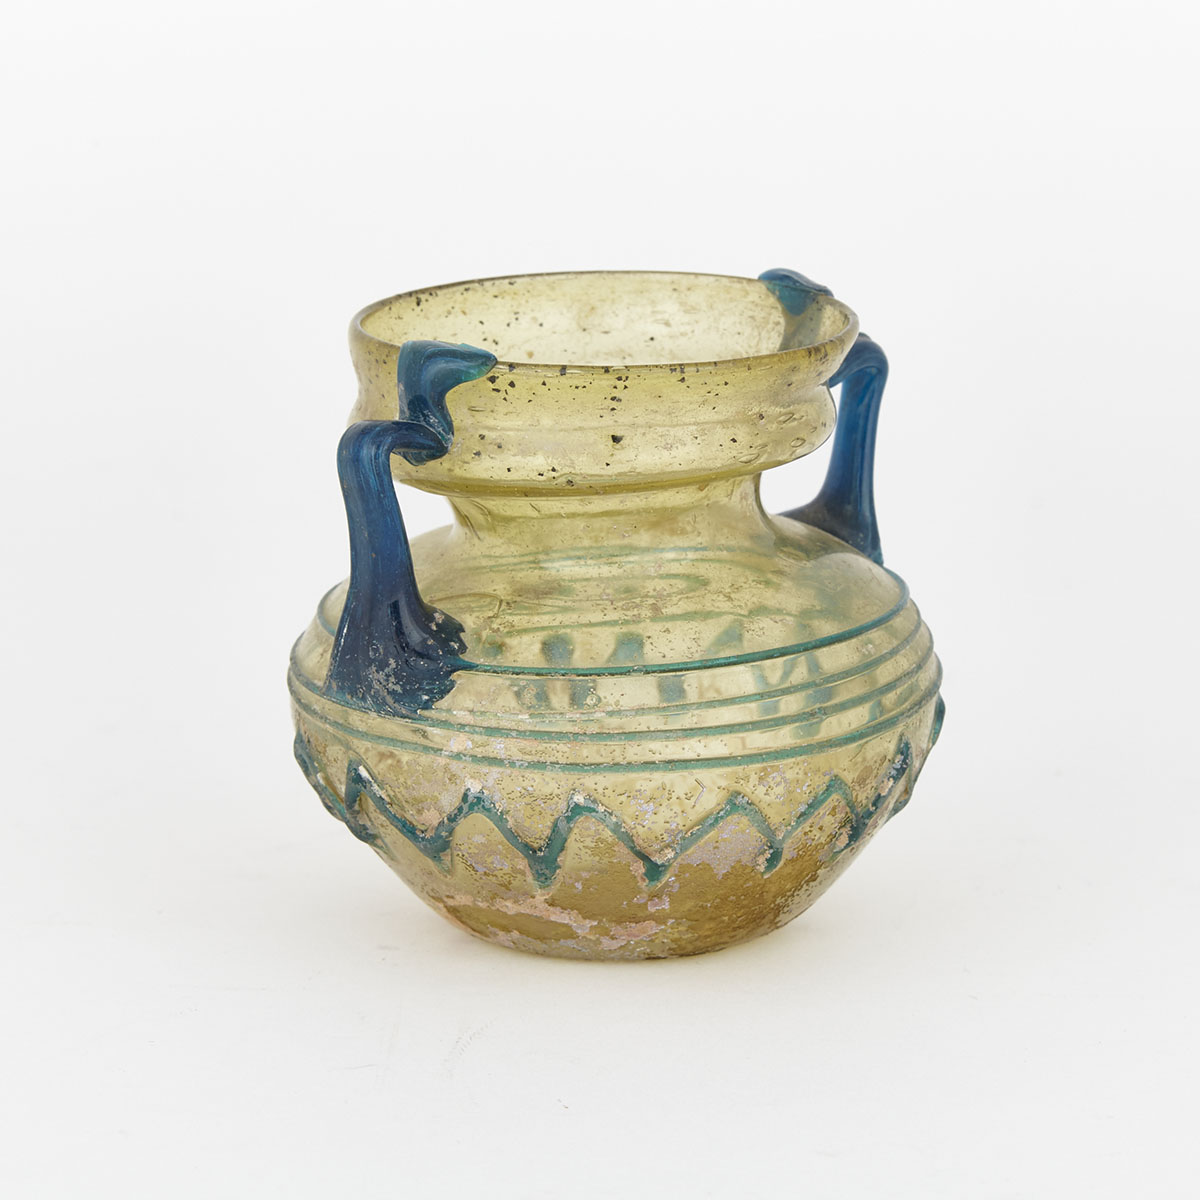 Eastern Mediterranean Bicolour Glass Aryballos, Roman Period, 4th century